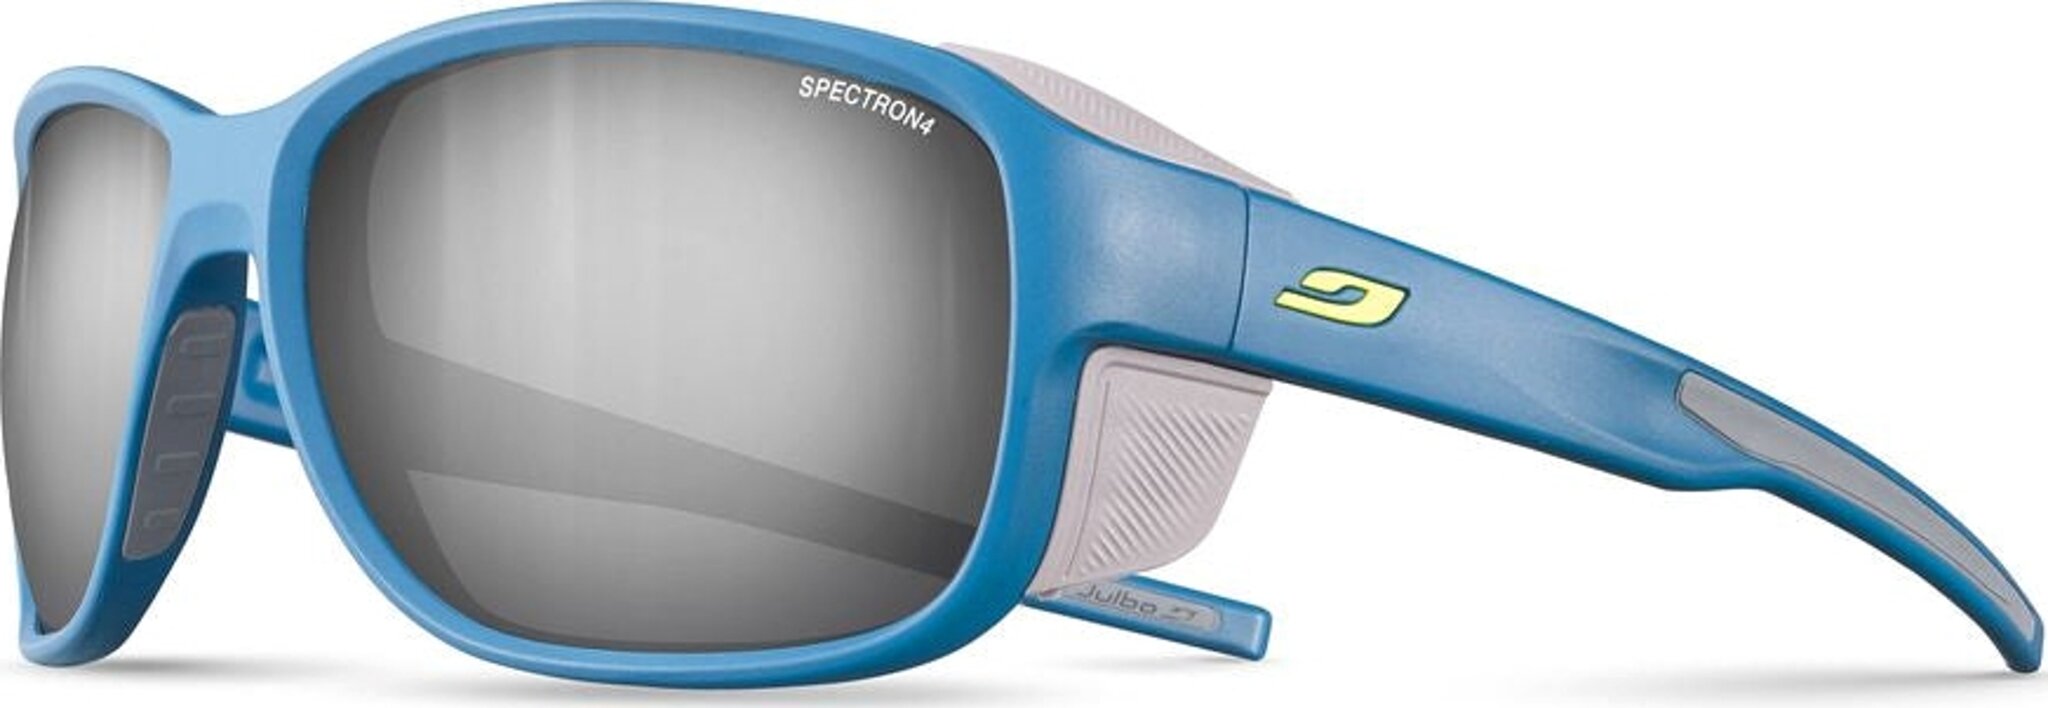 Julbo Montebianco 2 Spectron 3 Sunglasses - Men's